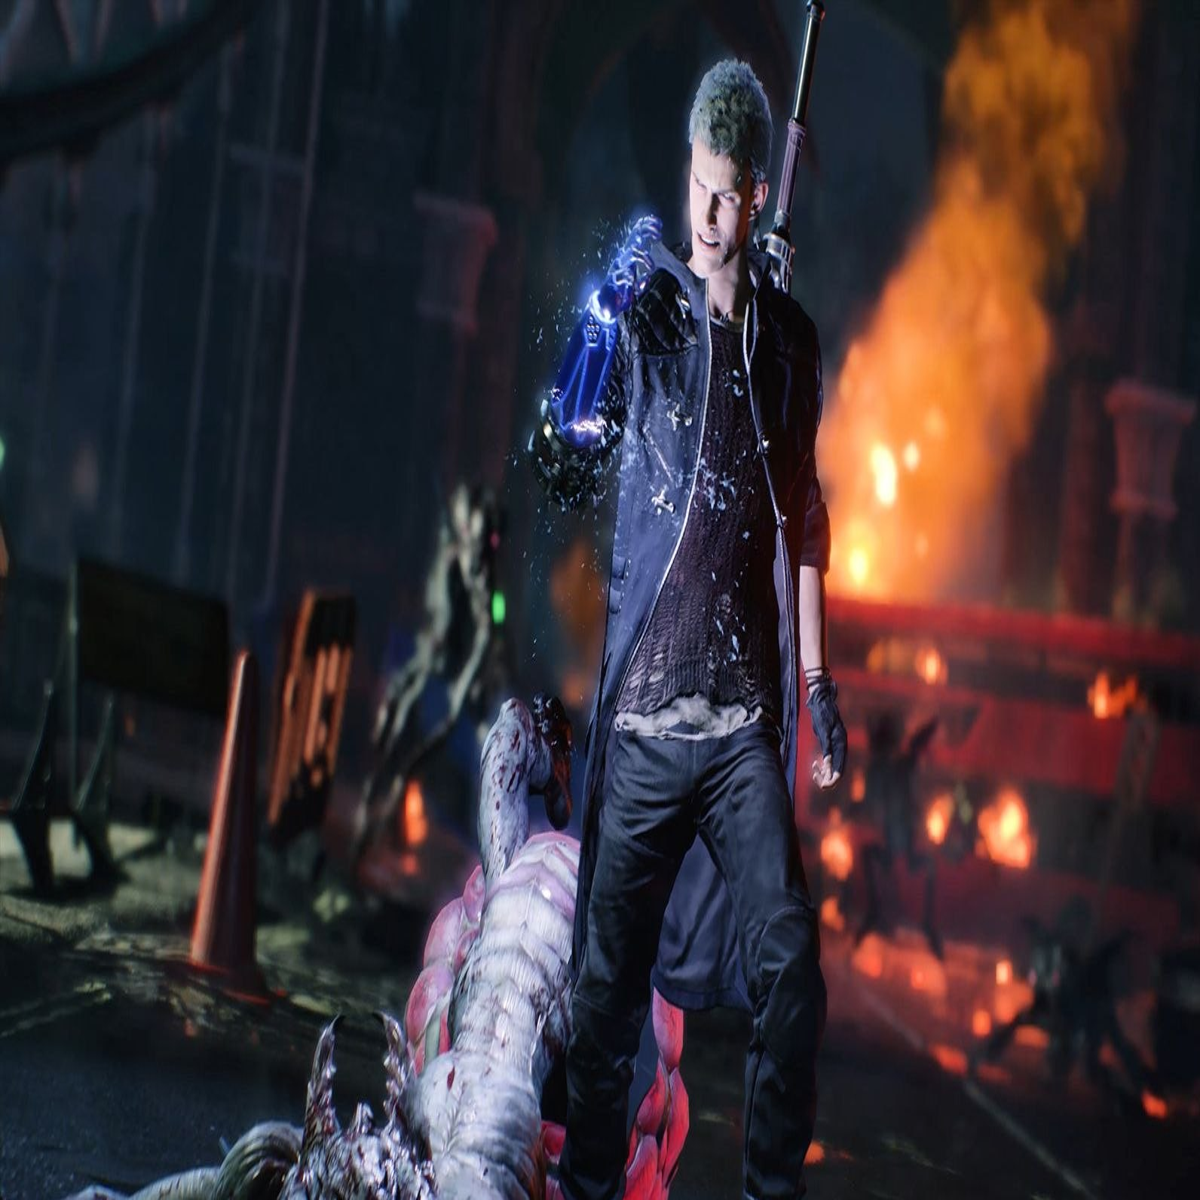 Devil May Cry 5 Dante in Depth Guide Full Tutorial 